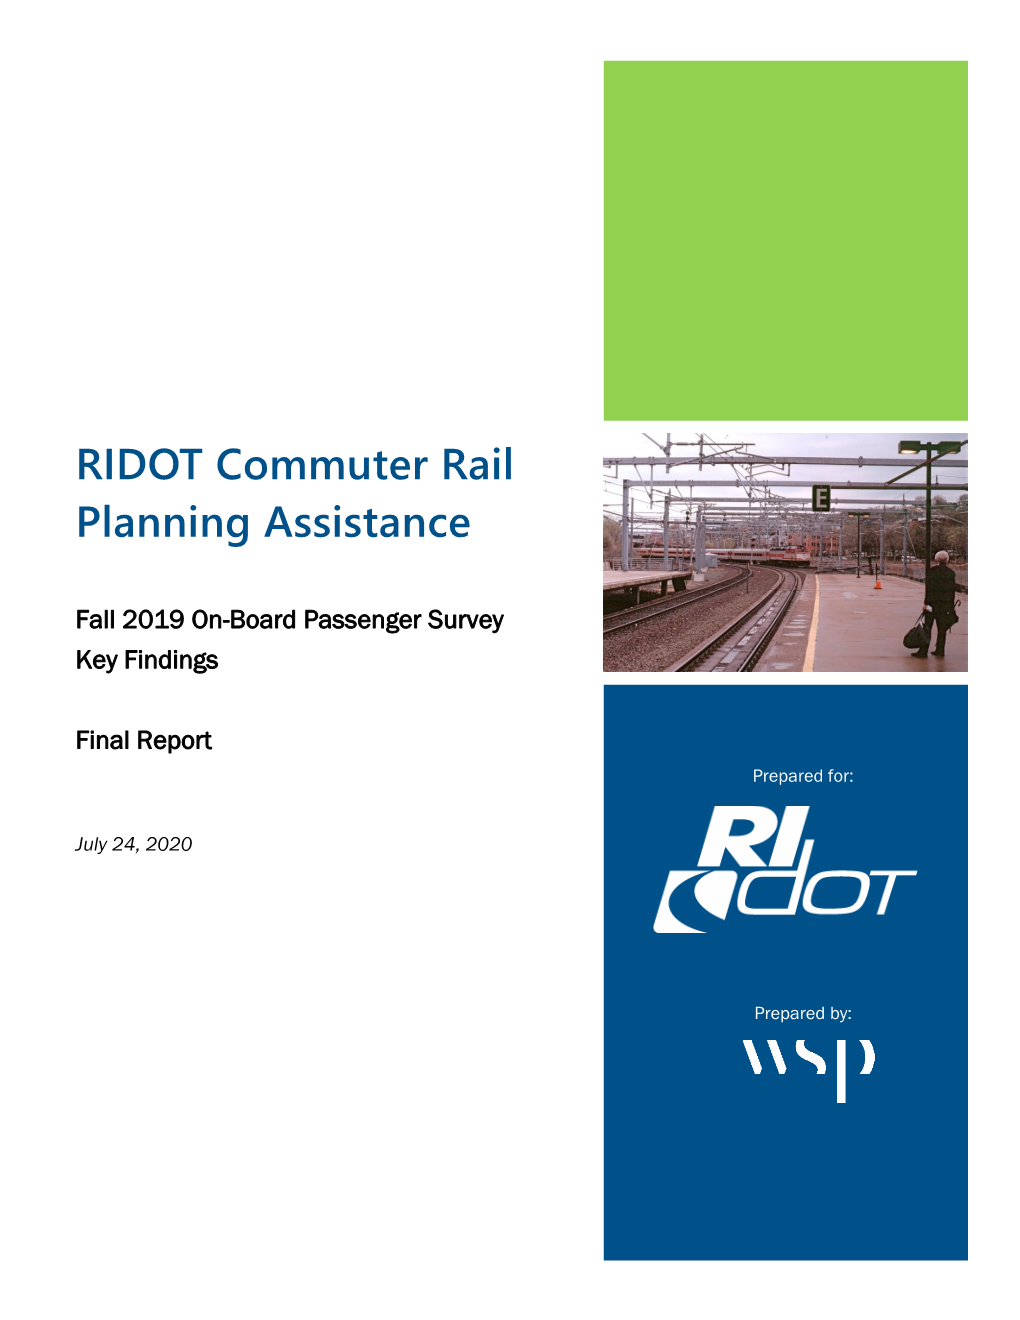 RIDOT MBTA Passenger Survey